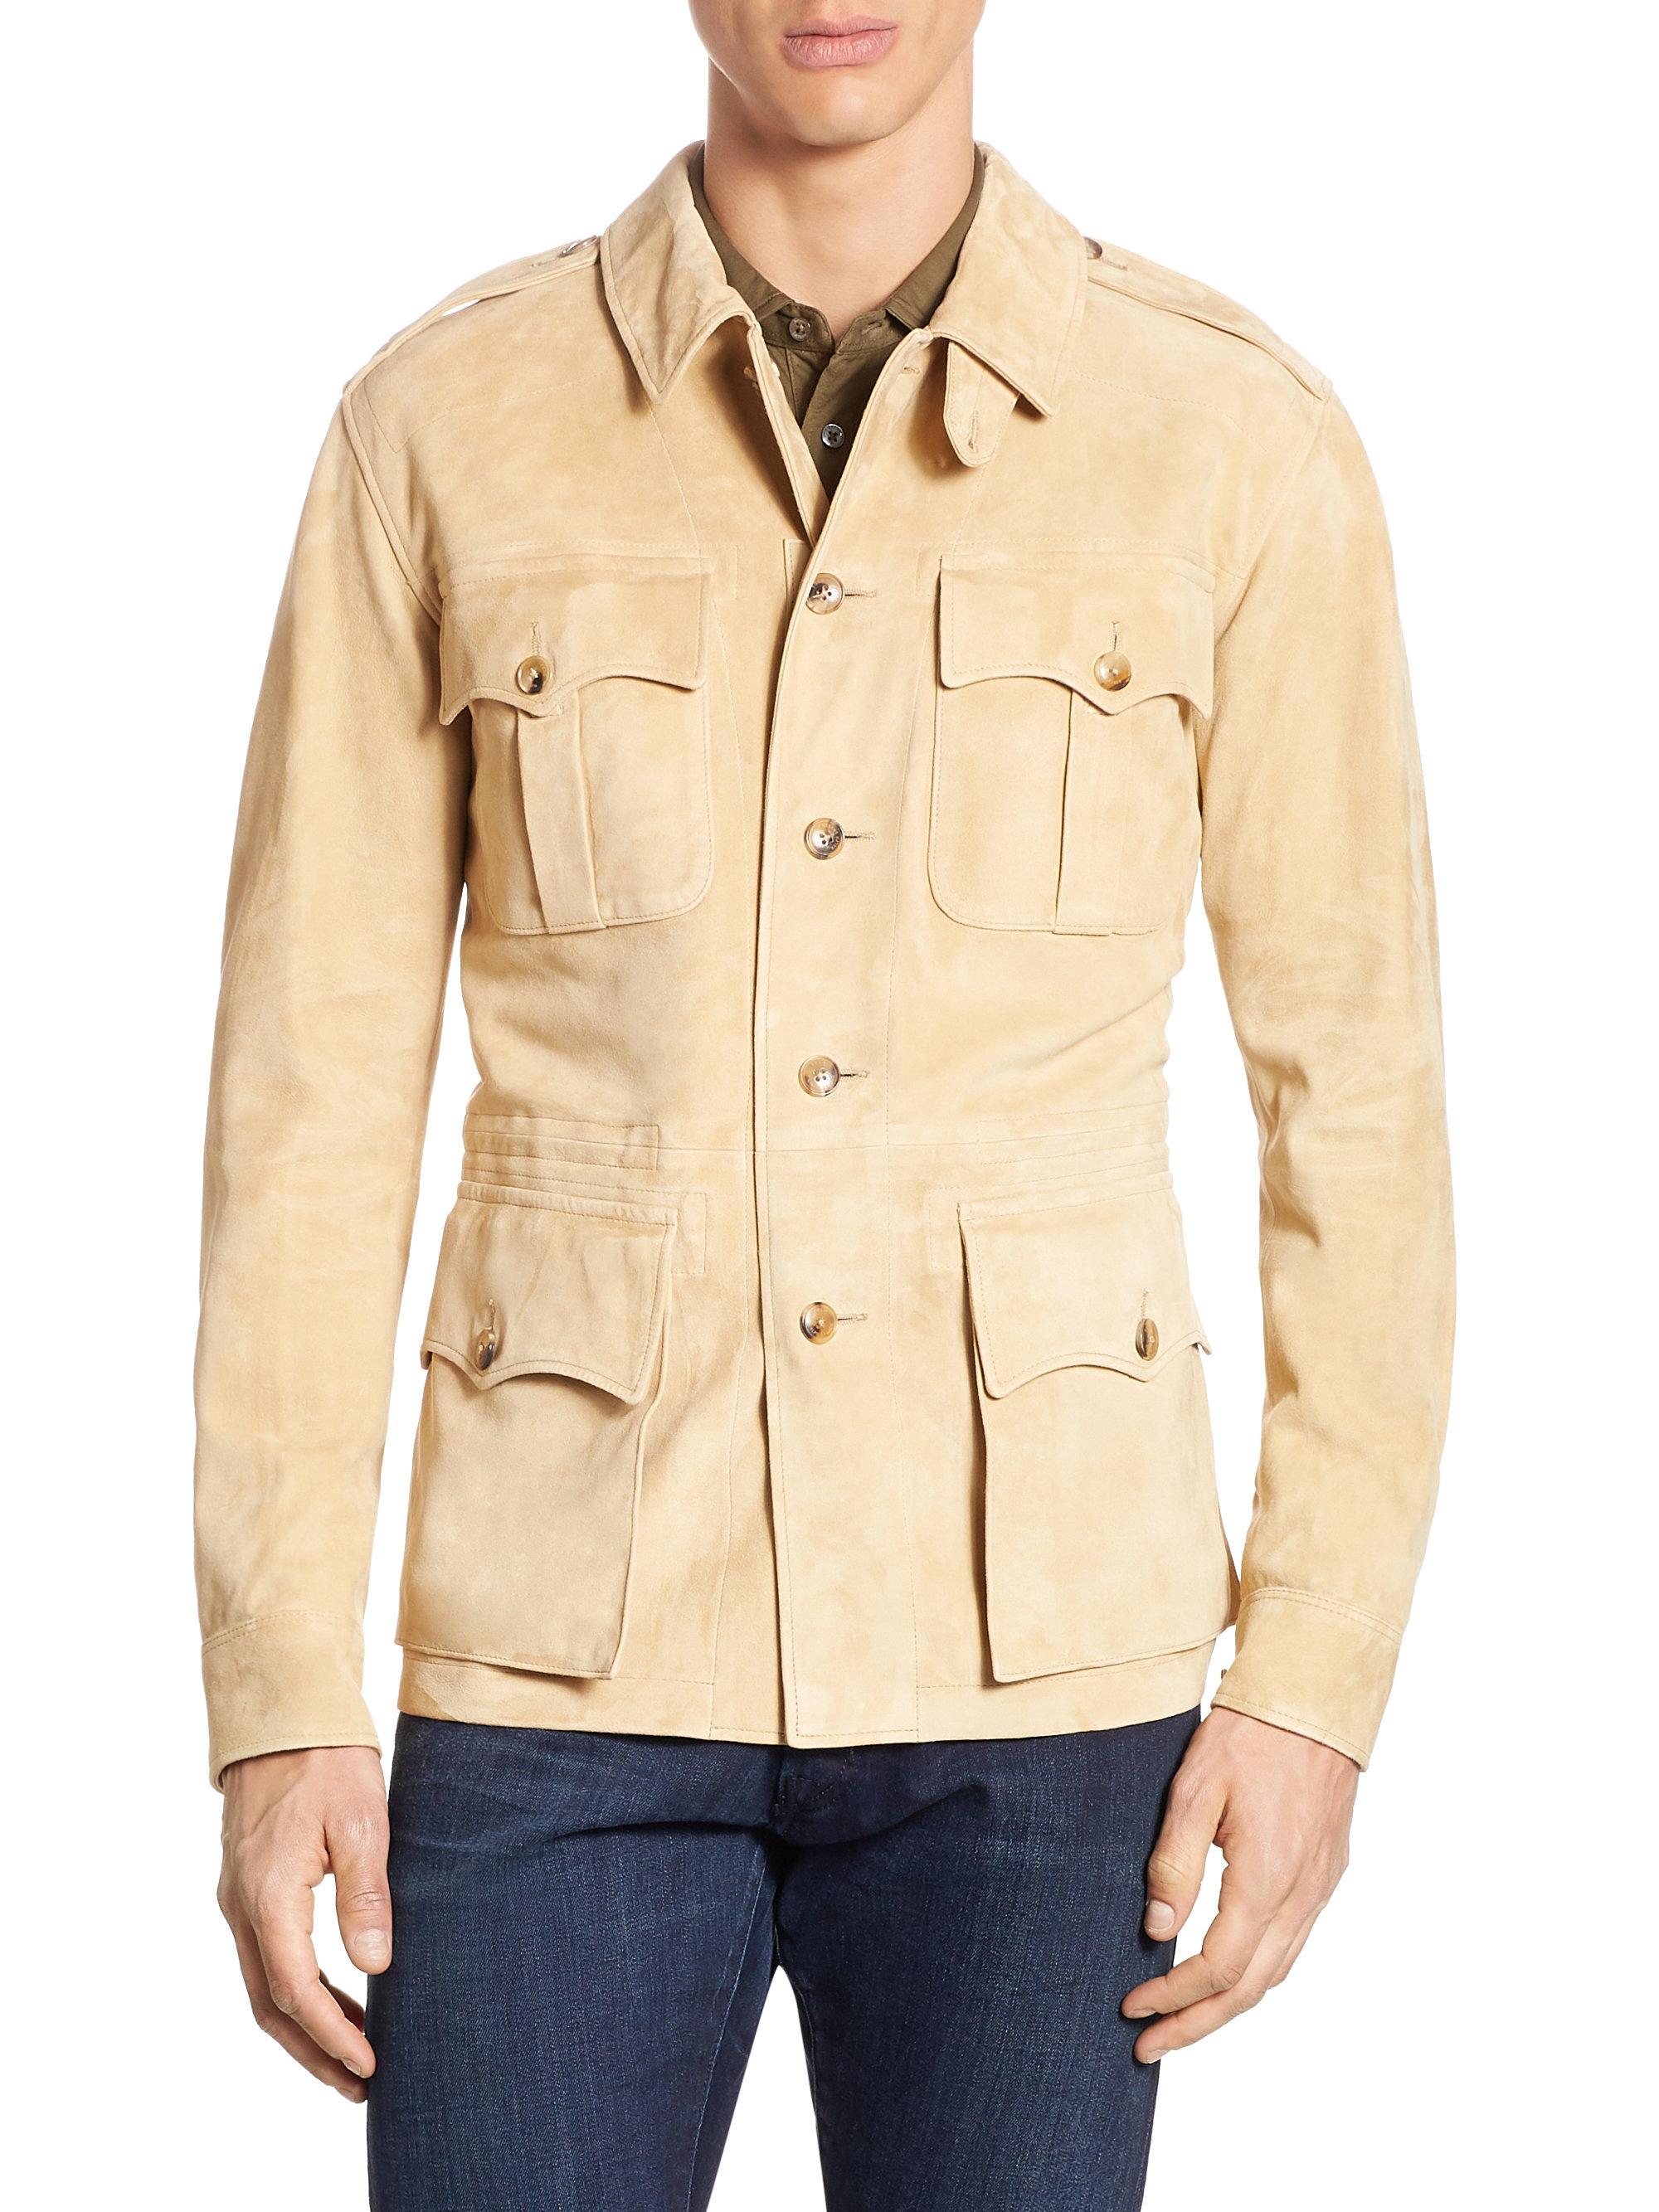 safari style jackets mens